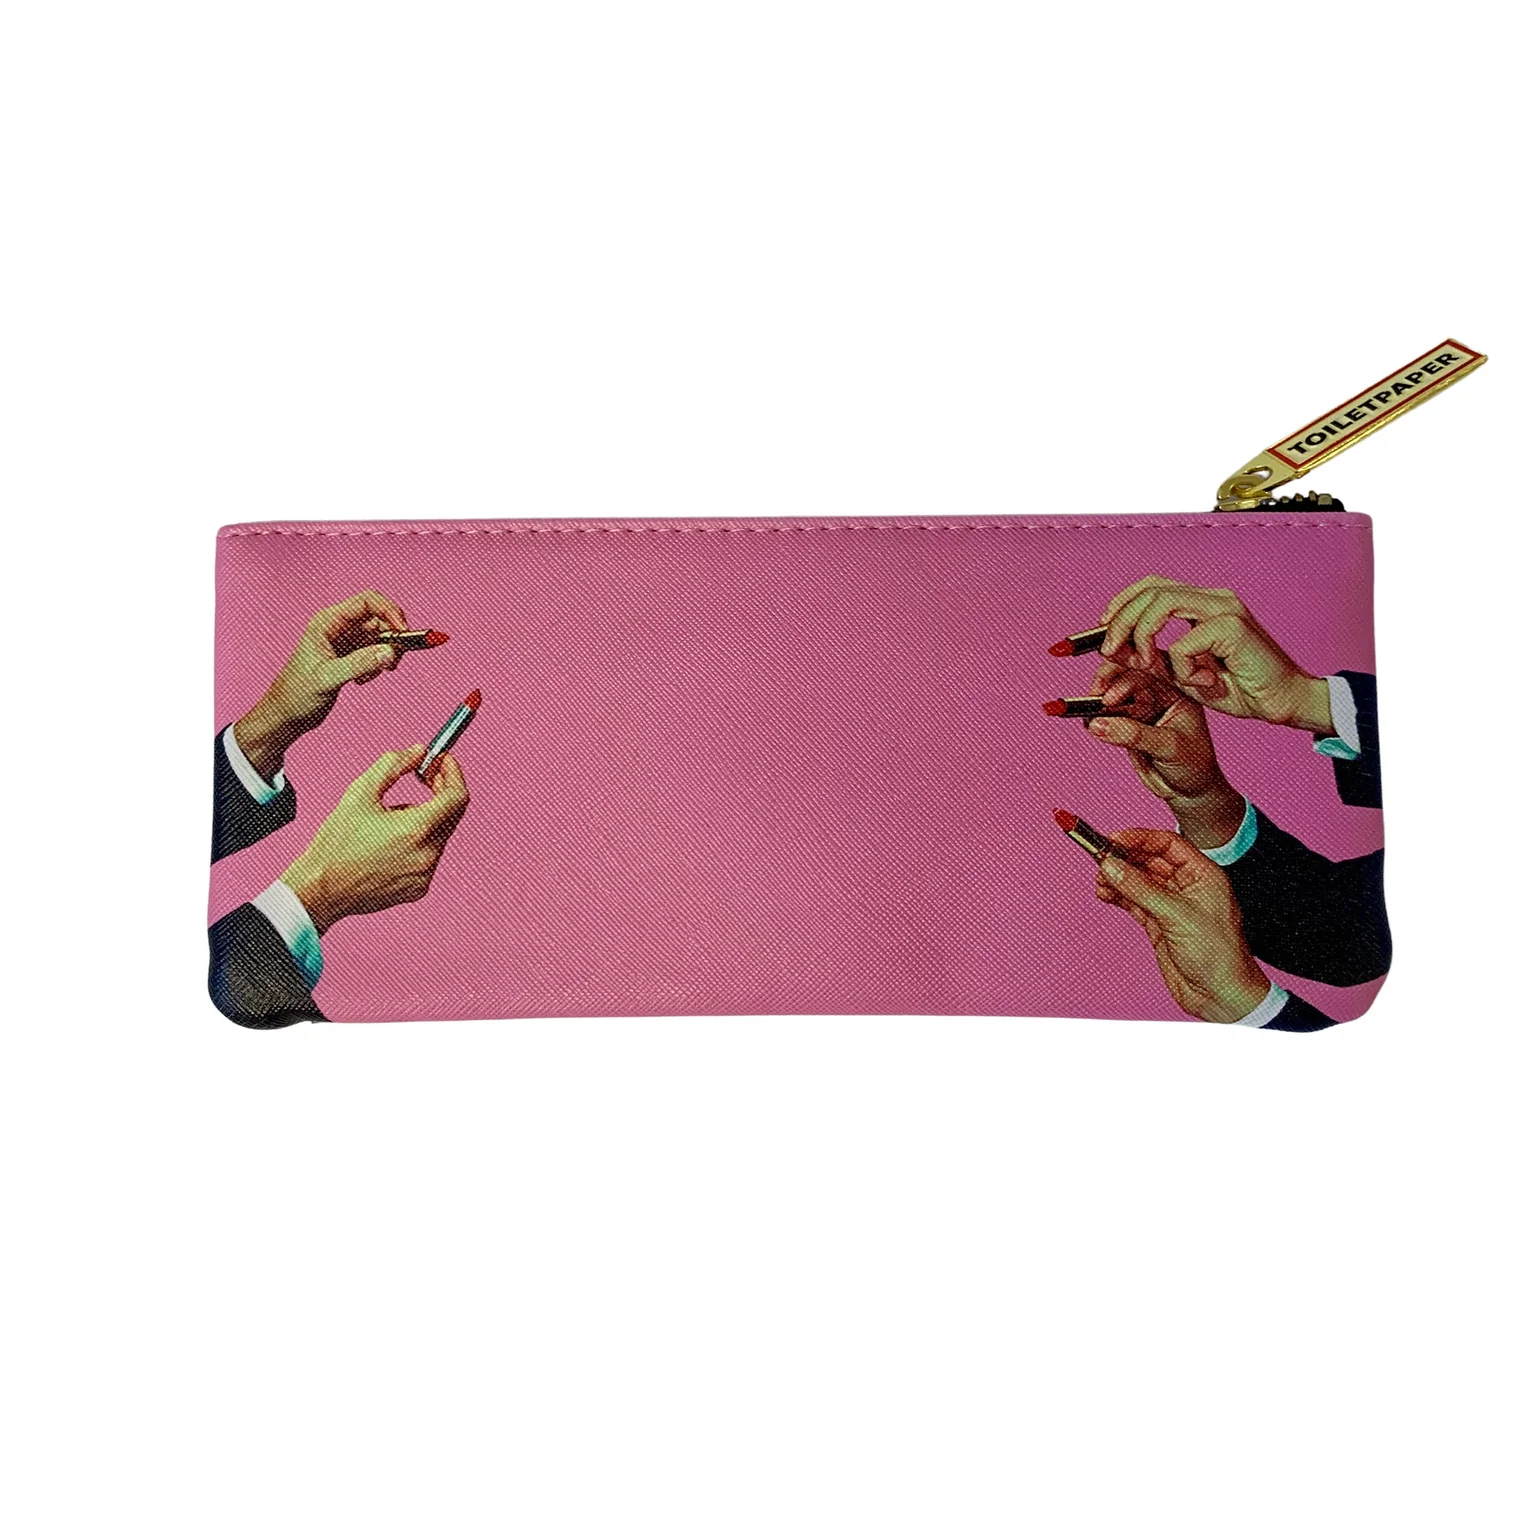 rectangular pink zip case with five hands holding lipsticks